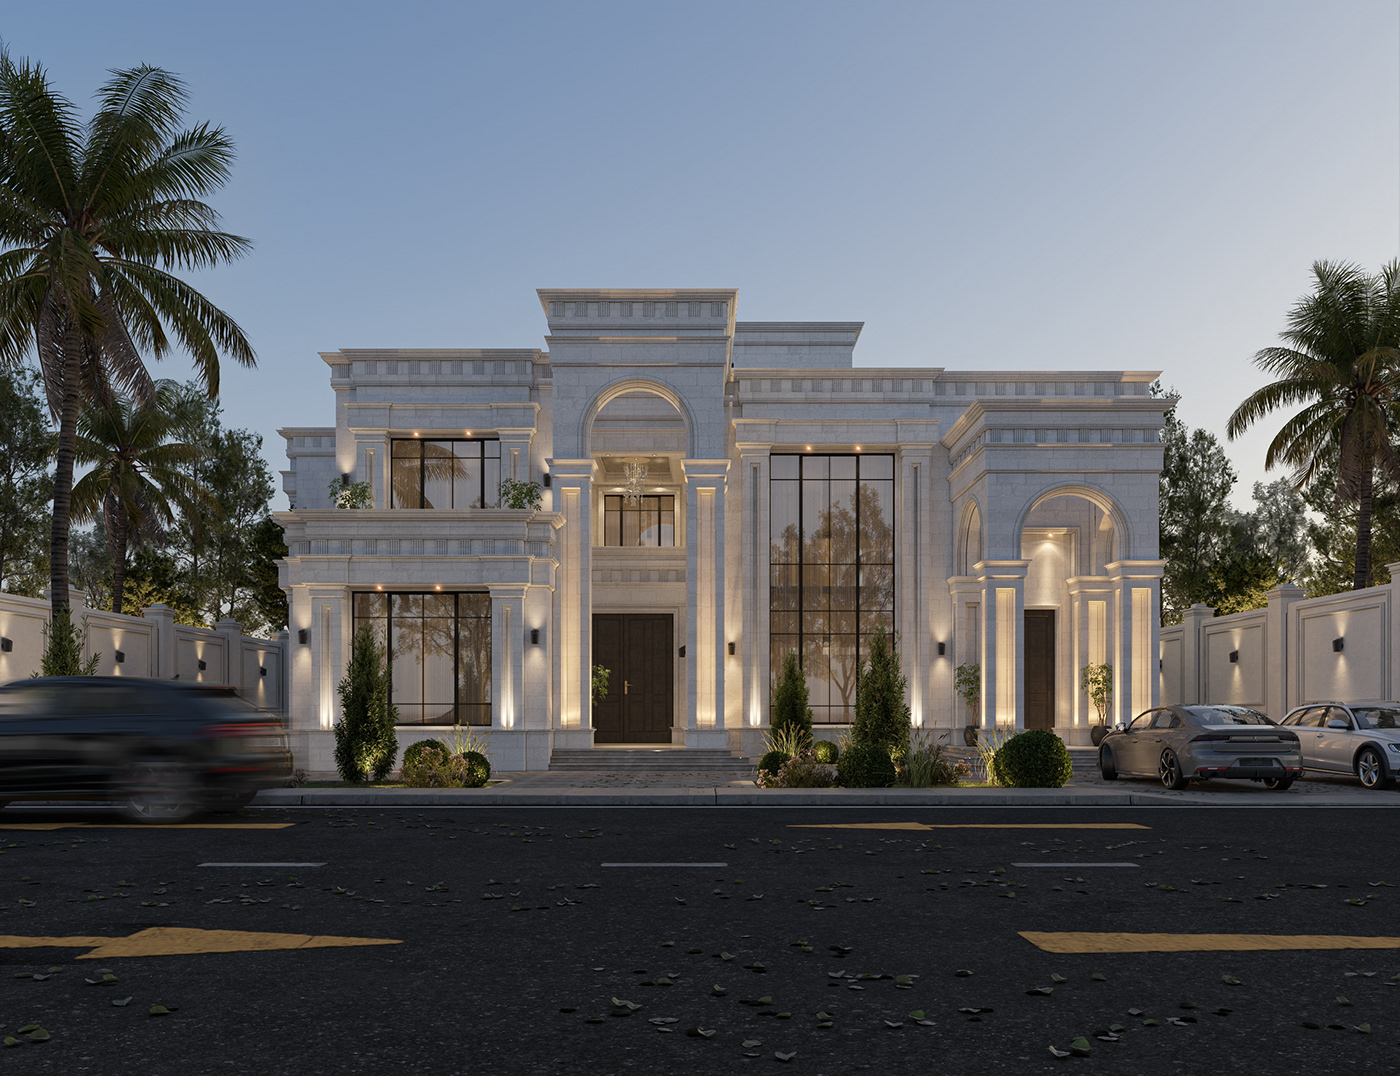 building Render Classic neoclassic design ornaments decorative architecture exterior 3ds max CGI